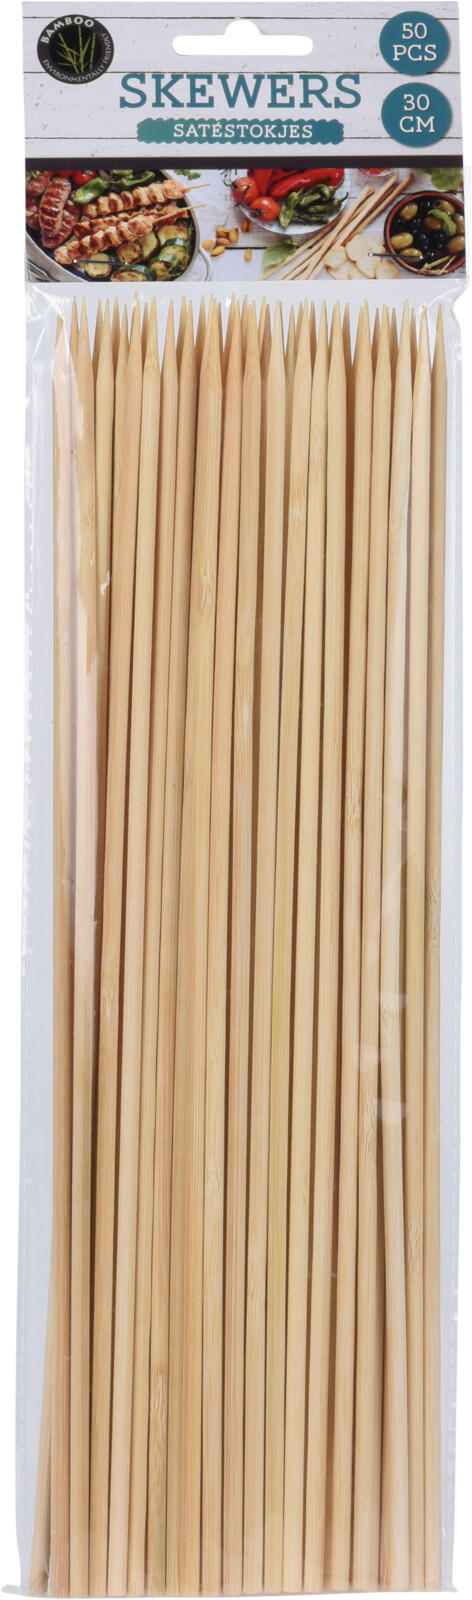 špejle bambus 30cmx4mm (50ks) 0.14 Kg MAXMIX Sklad14 386246 201